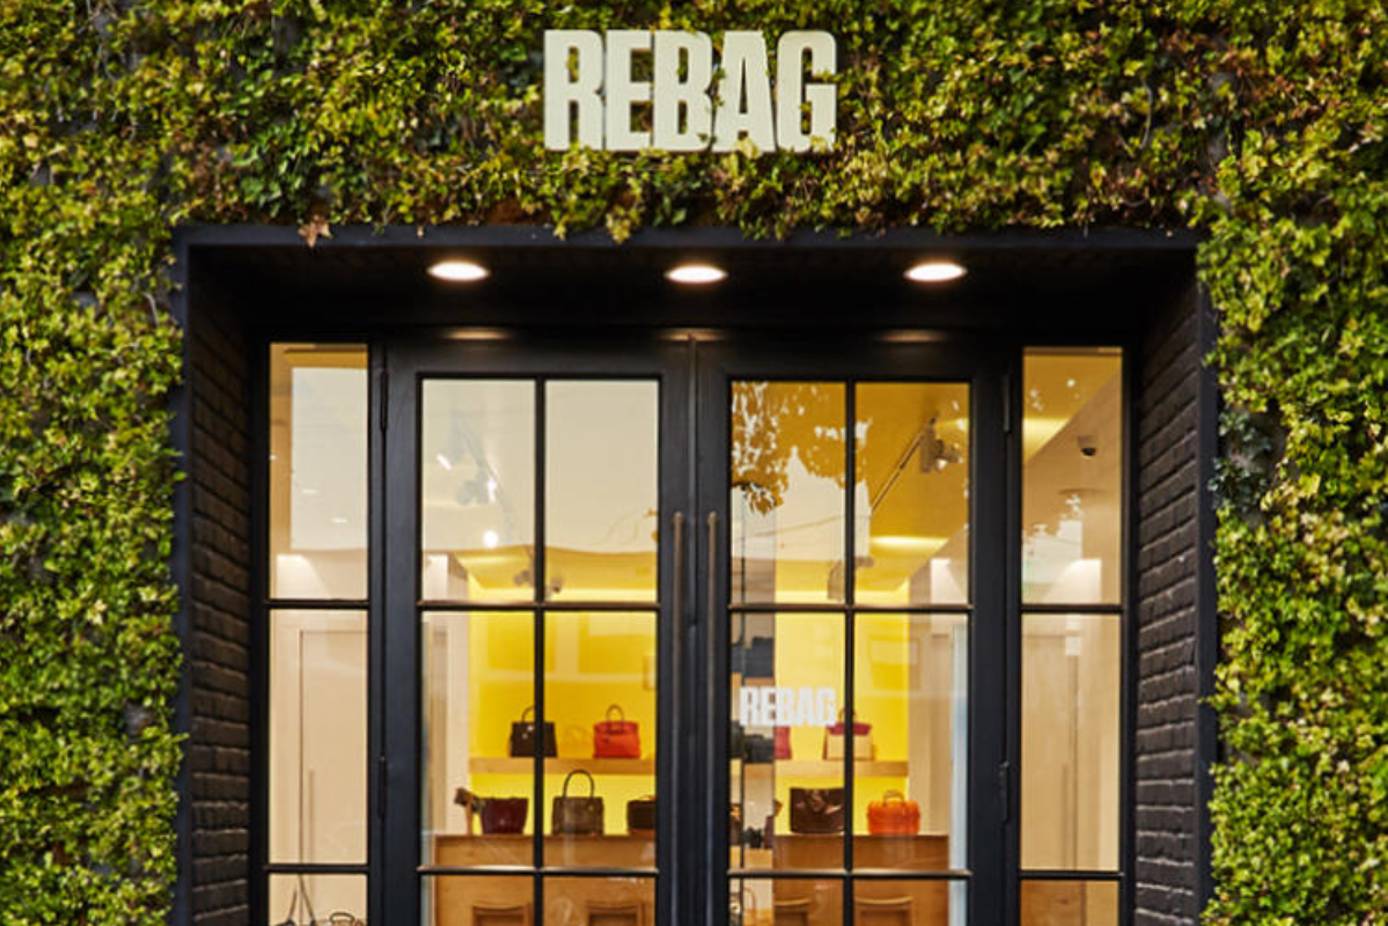 Moda Operandi explores resale with Rebag partnership